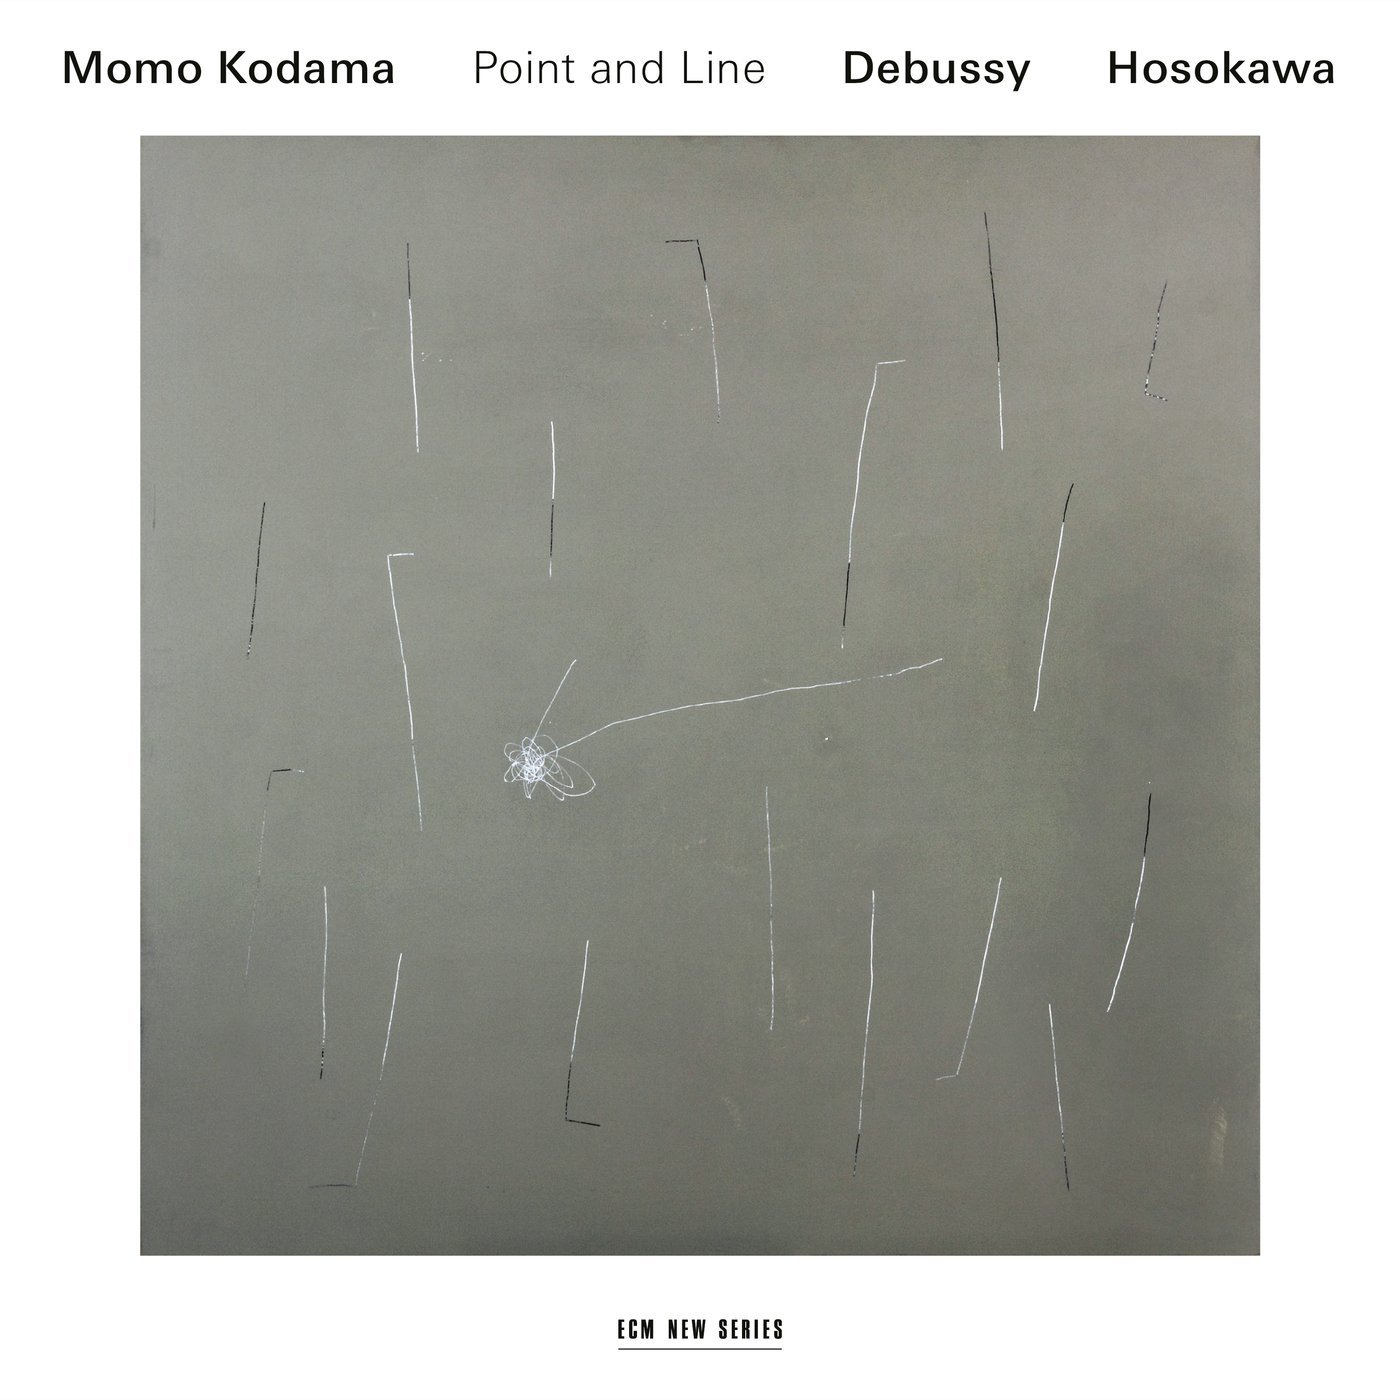 Momo Kodama's Point and Line